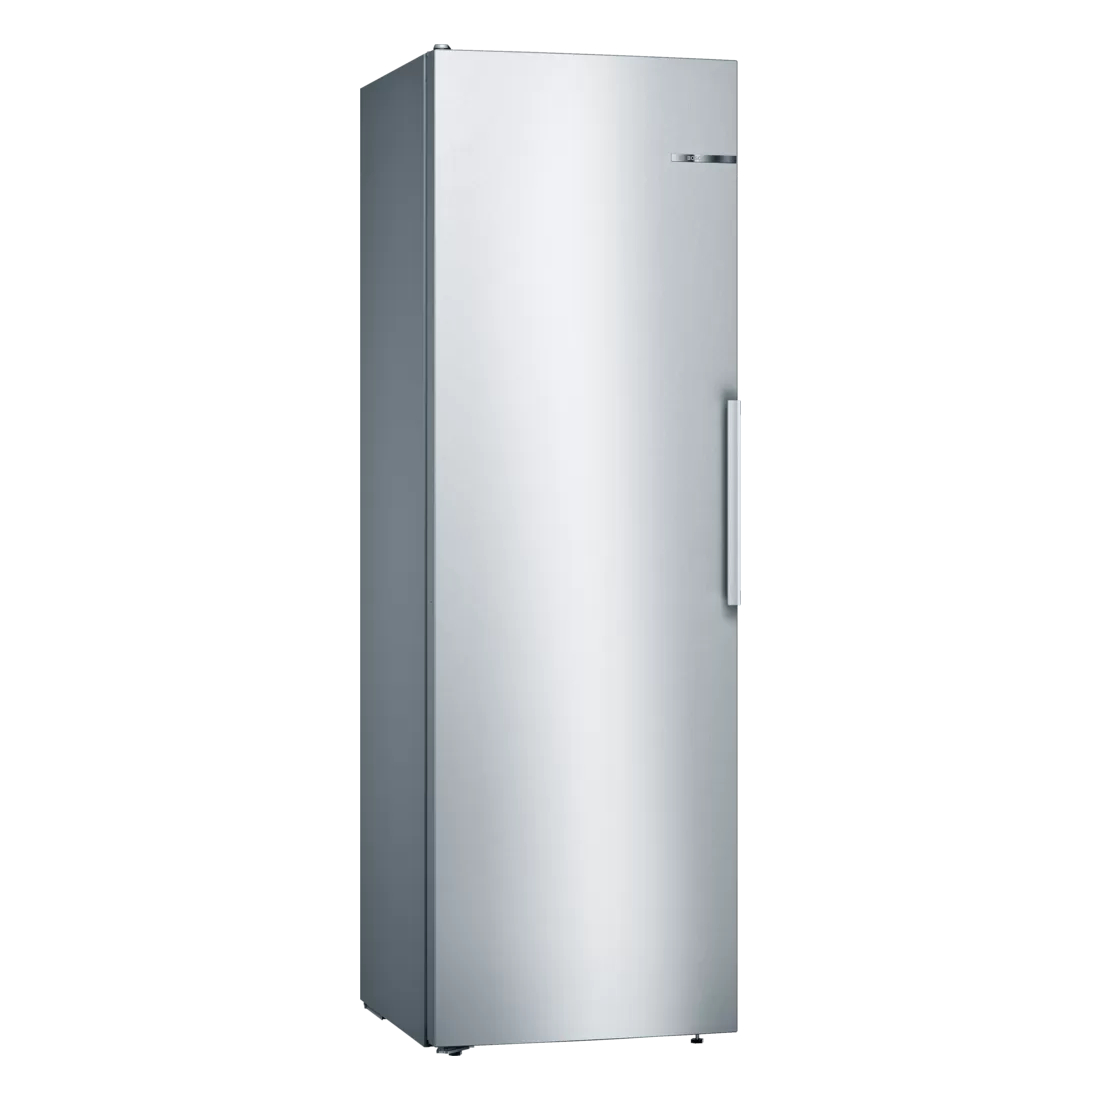 are bosch refrigerators reliable